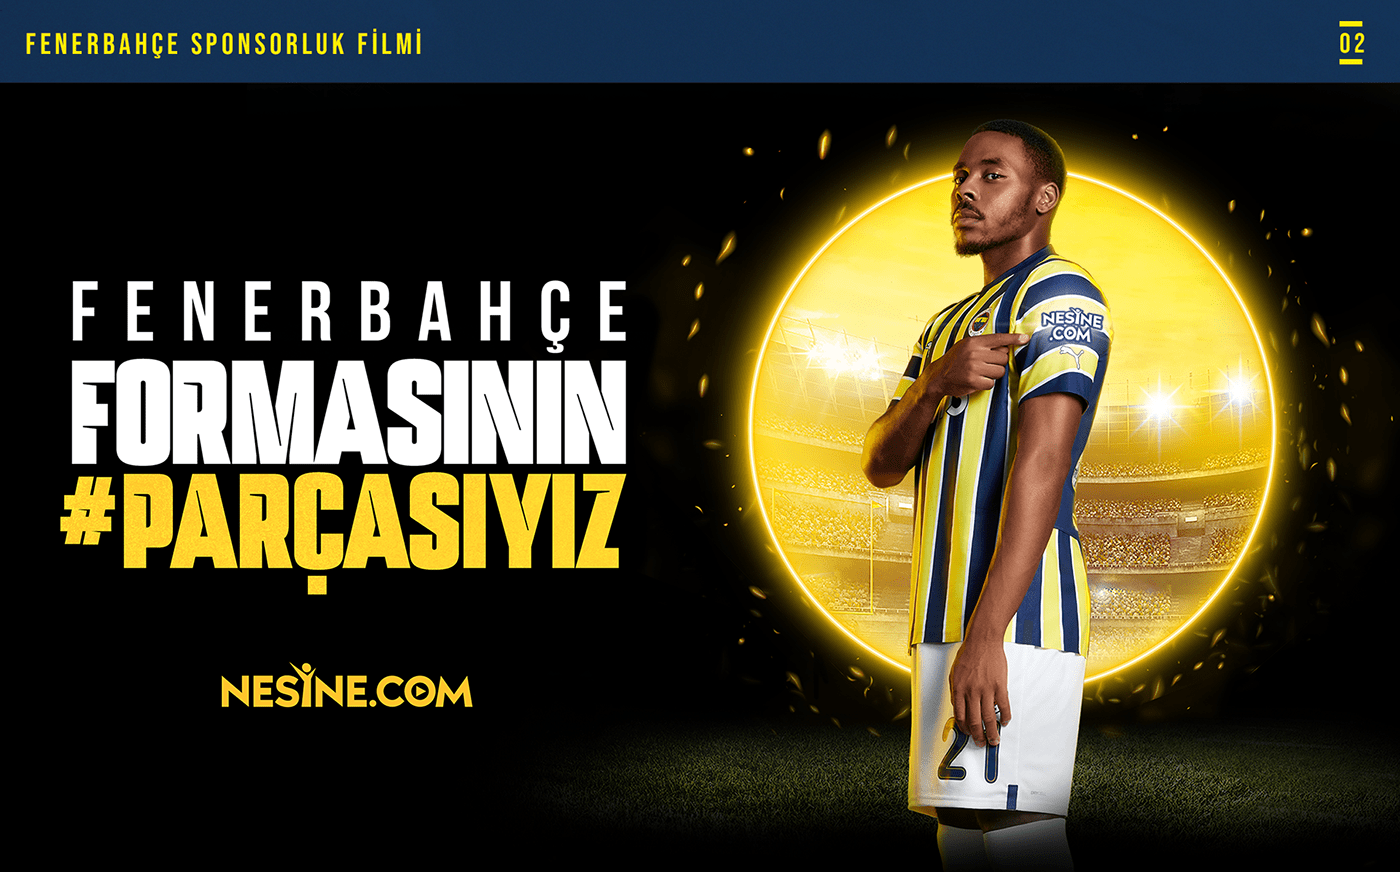 Beşiktaş Fenerbahçe football Futbol galatasaray karbonat nesine.com reklam Sponsorluk spor